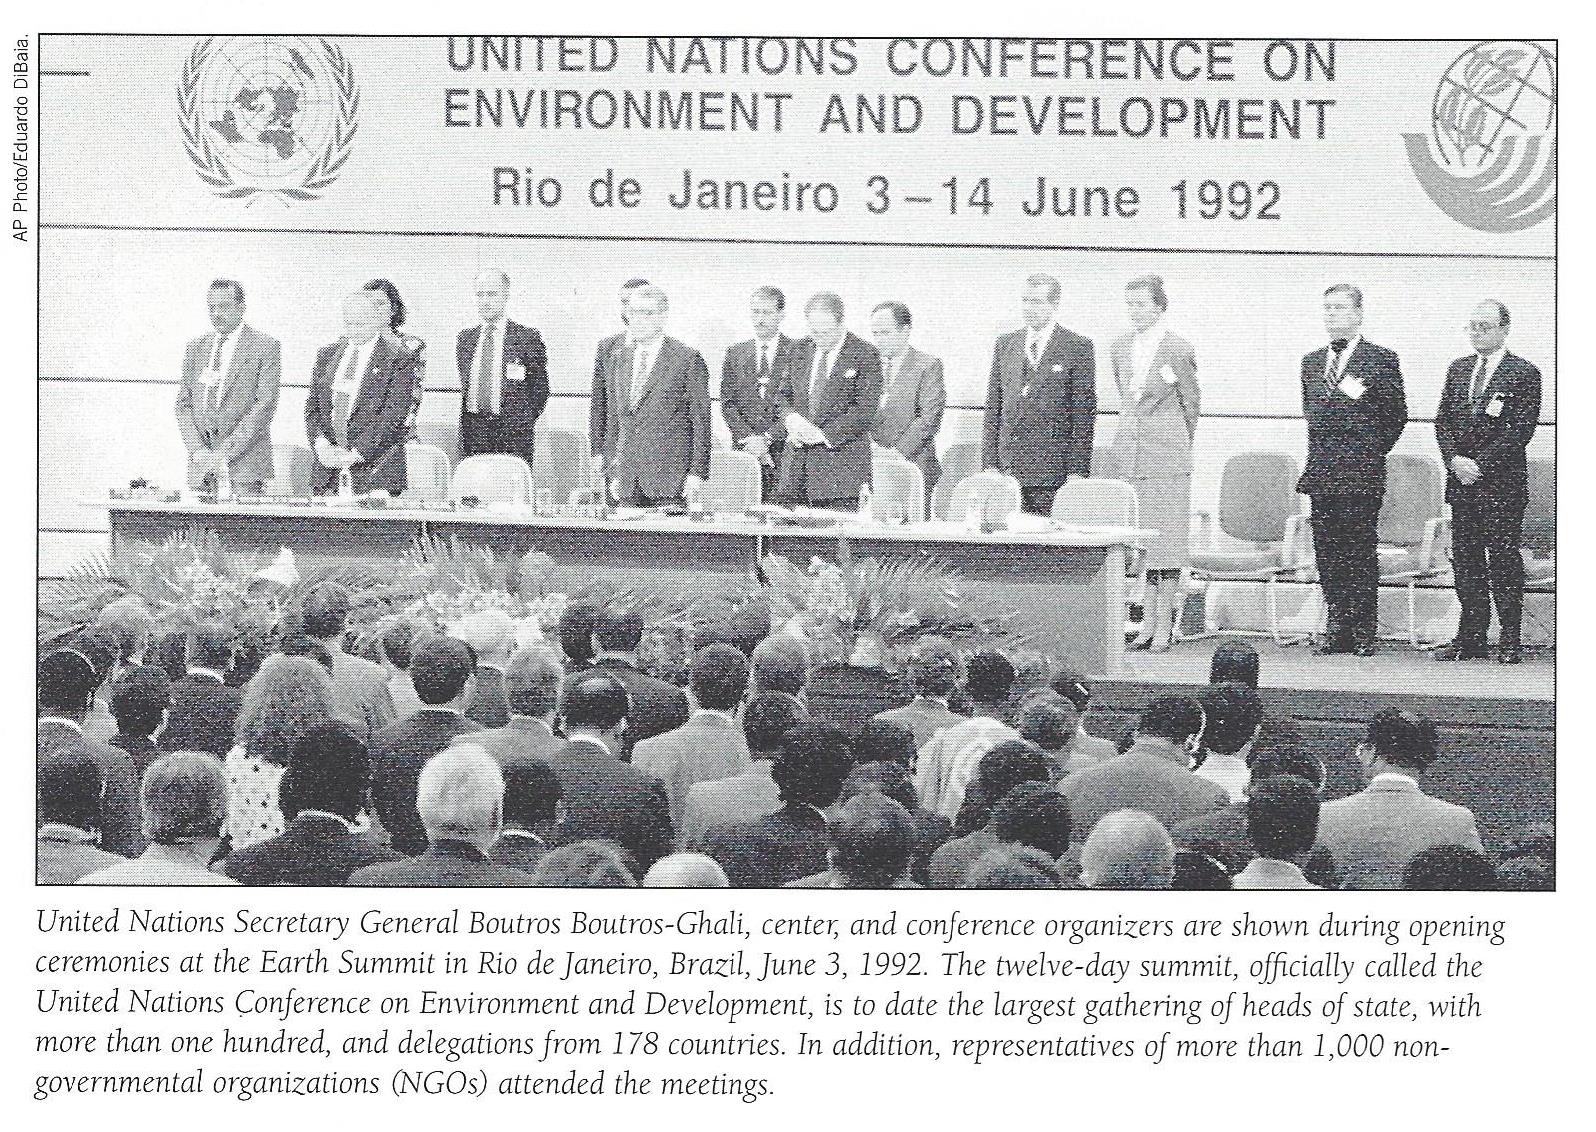 earth-summit-opening-ceremonies-1992